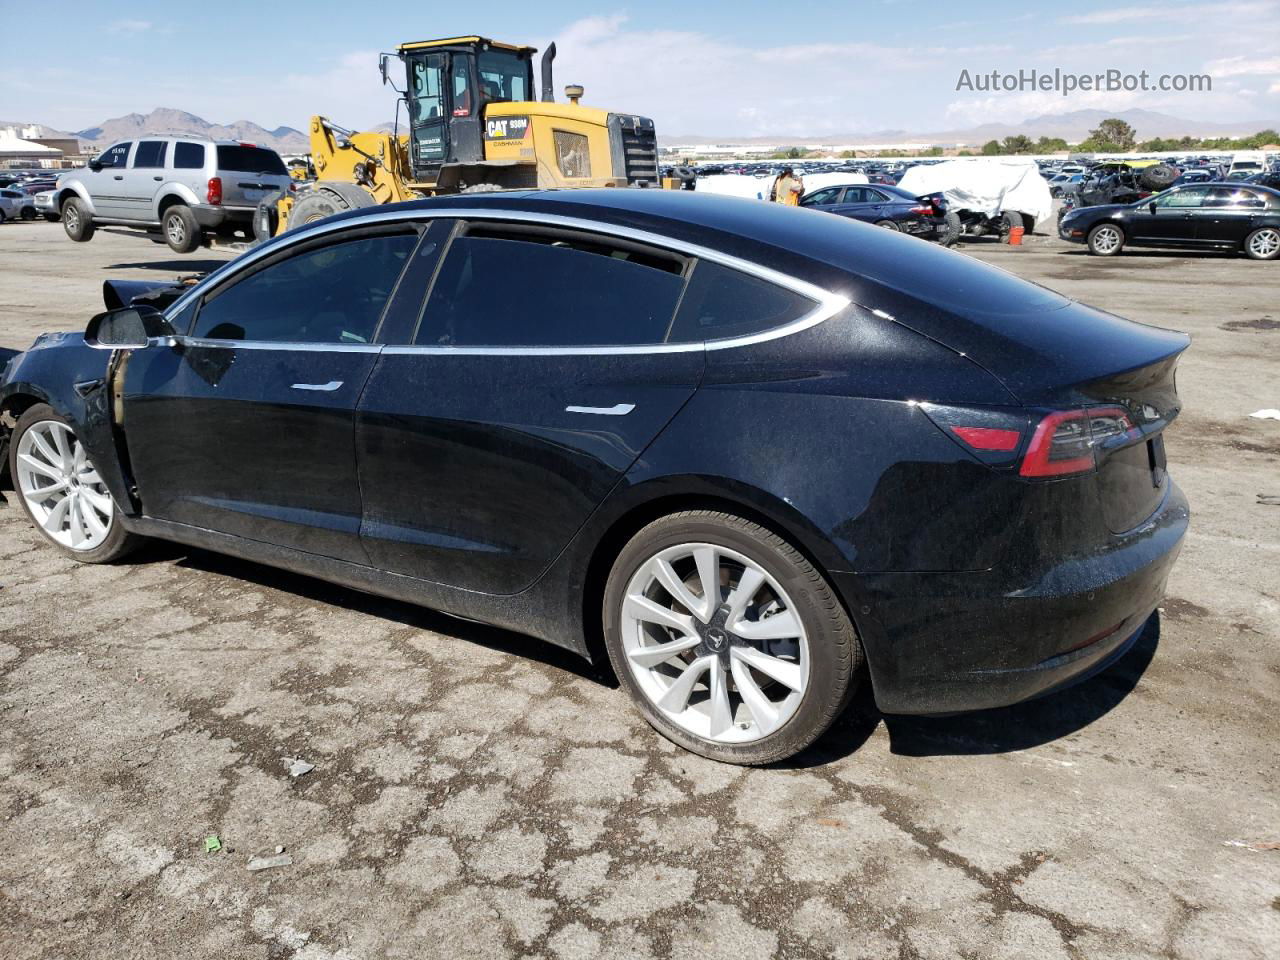 2019 Tesla Model 3  Black vin: 5YJ3E1EA3KF412567